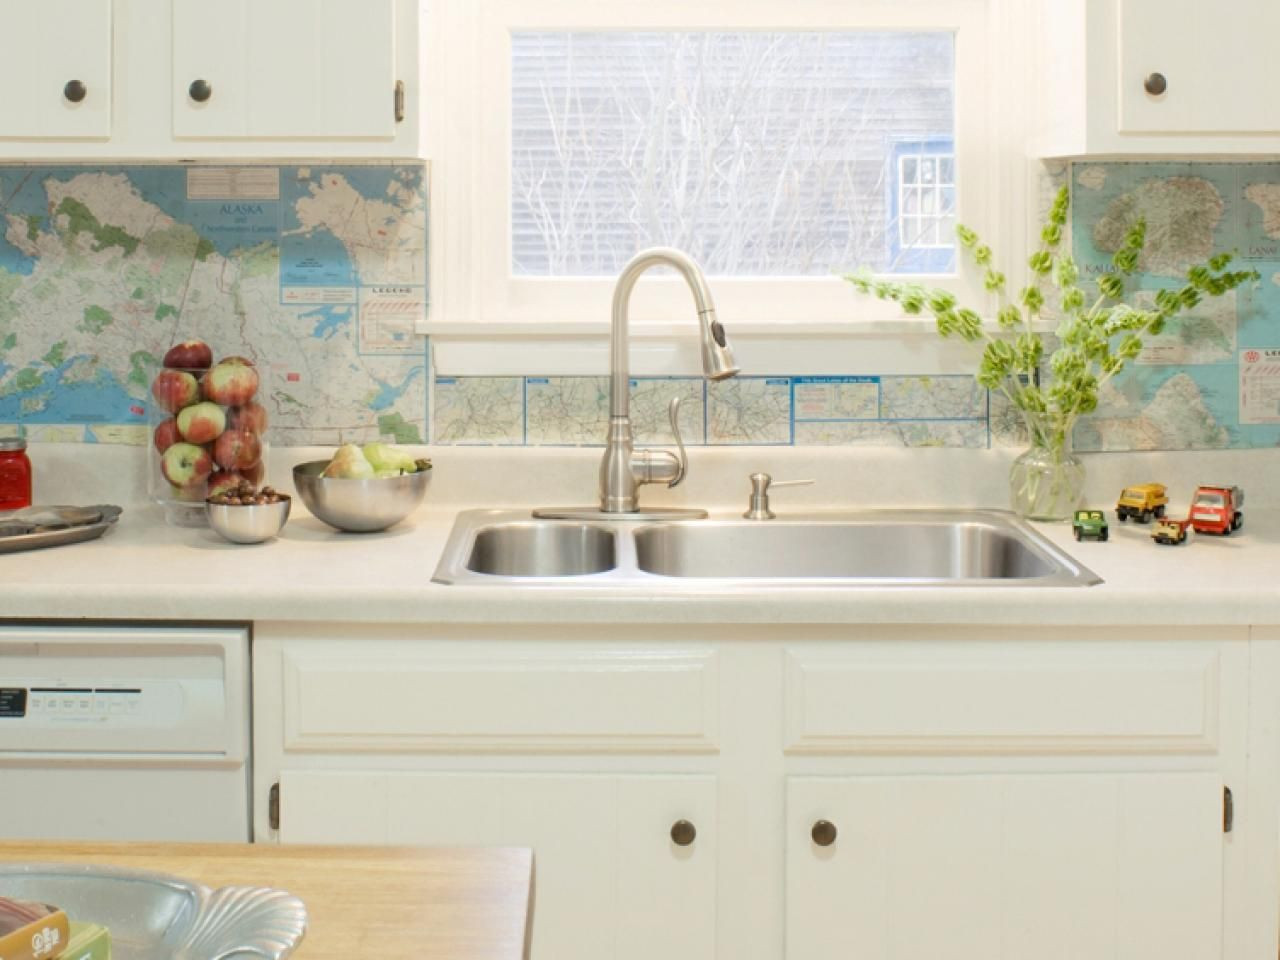 Backsplash Kitchen Diy
 Top 20 DIY Kitchen Backsplash Ideas